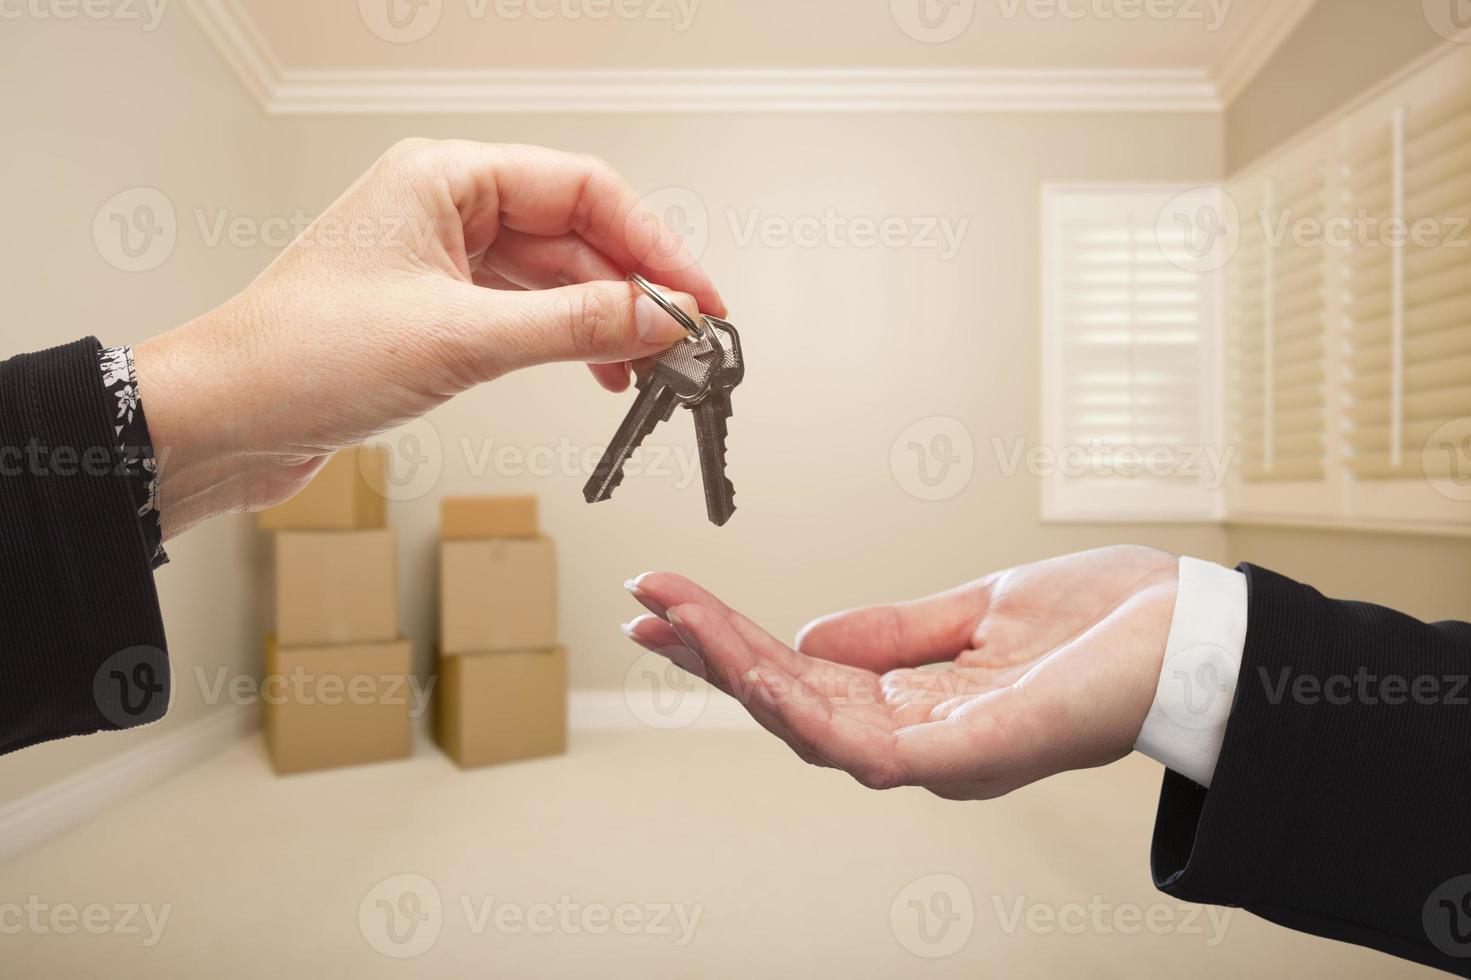 mulher entregando as chaves da casa dentro da sala tan vazia foto